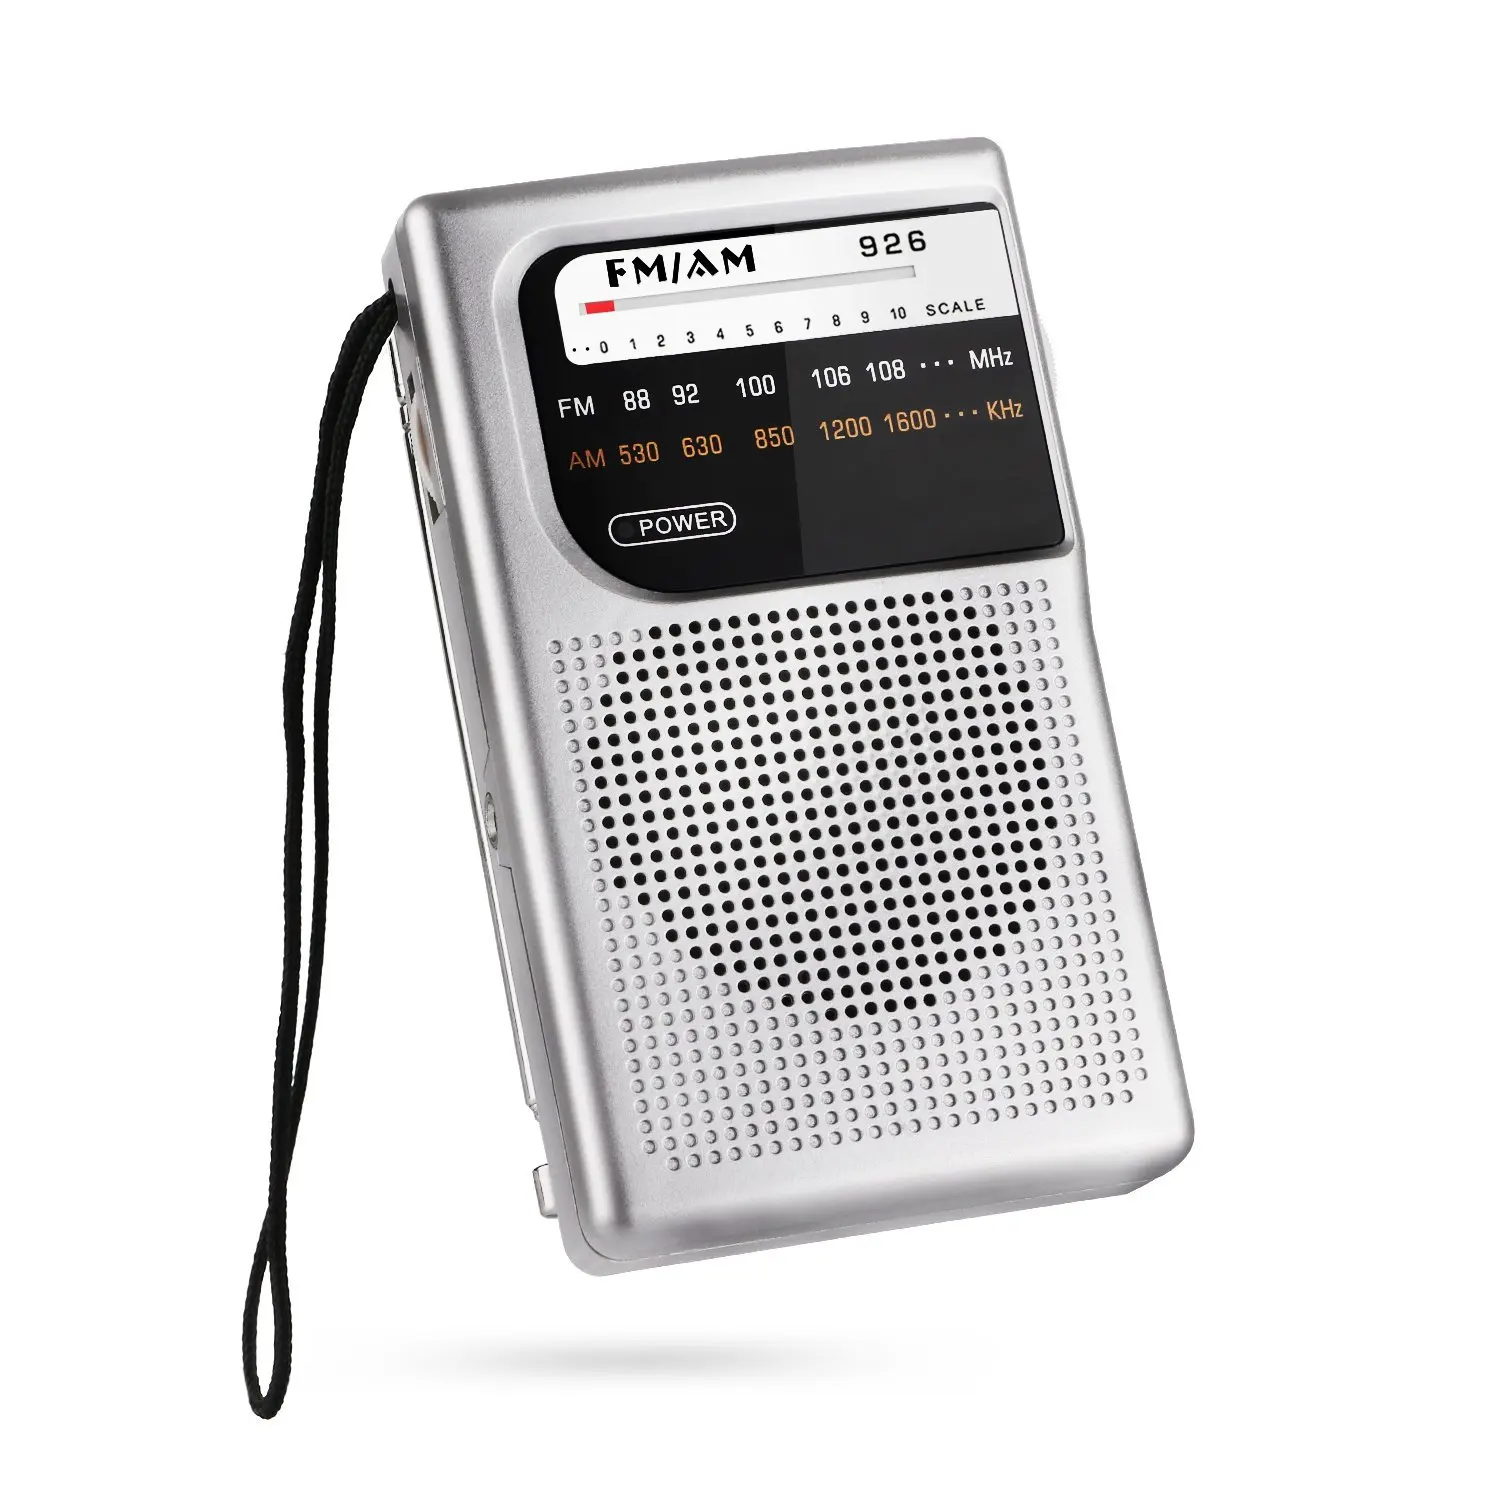 

radio transistor wireless outdoor am fm radio antenna old portable radios, Black, silver white